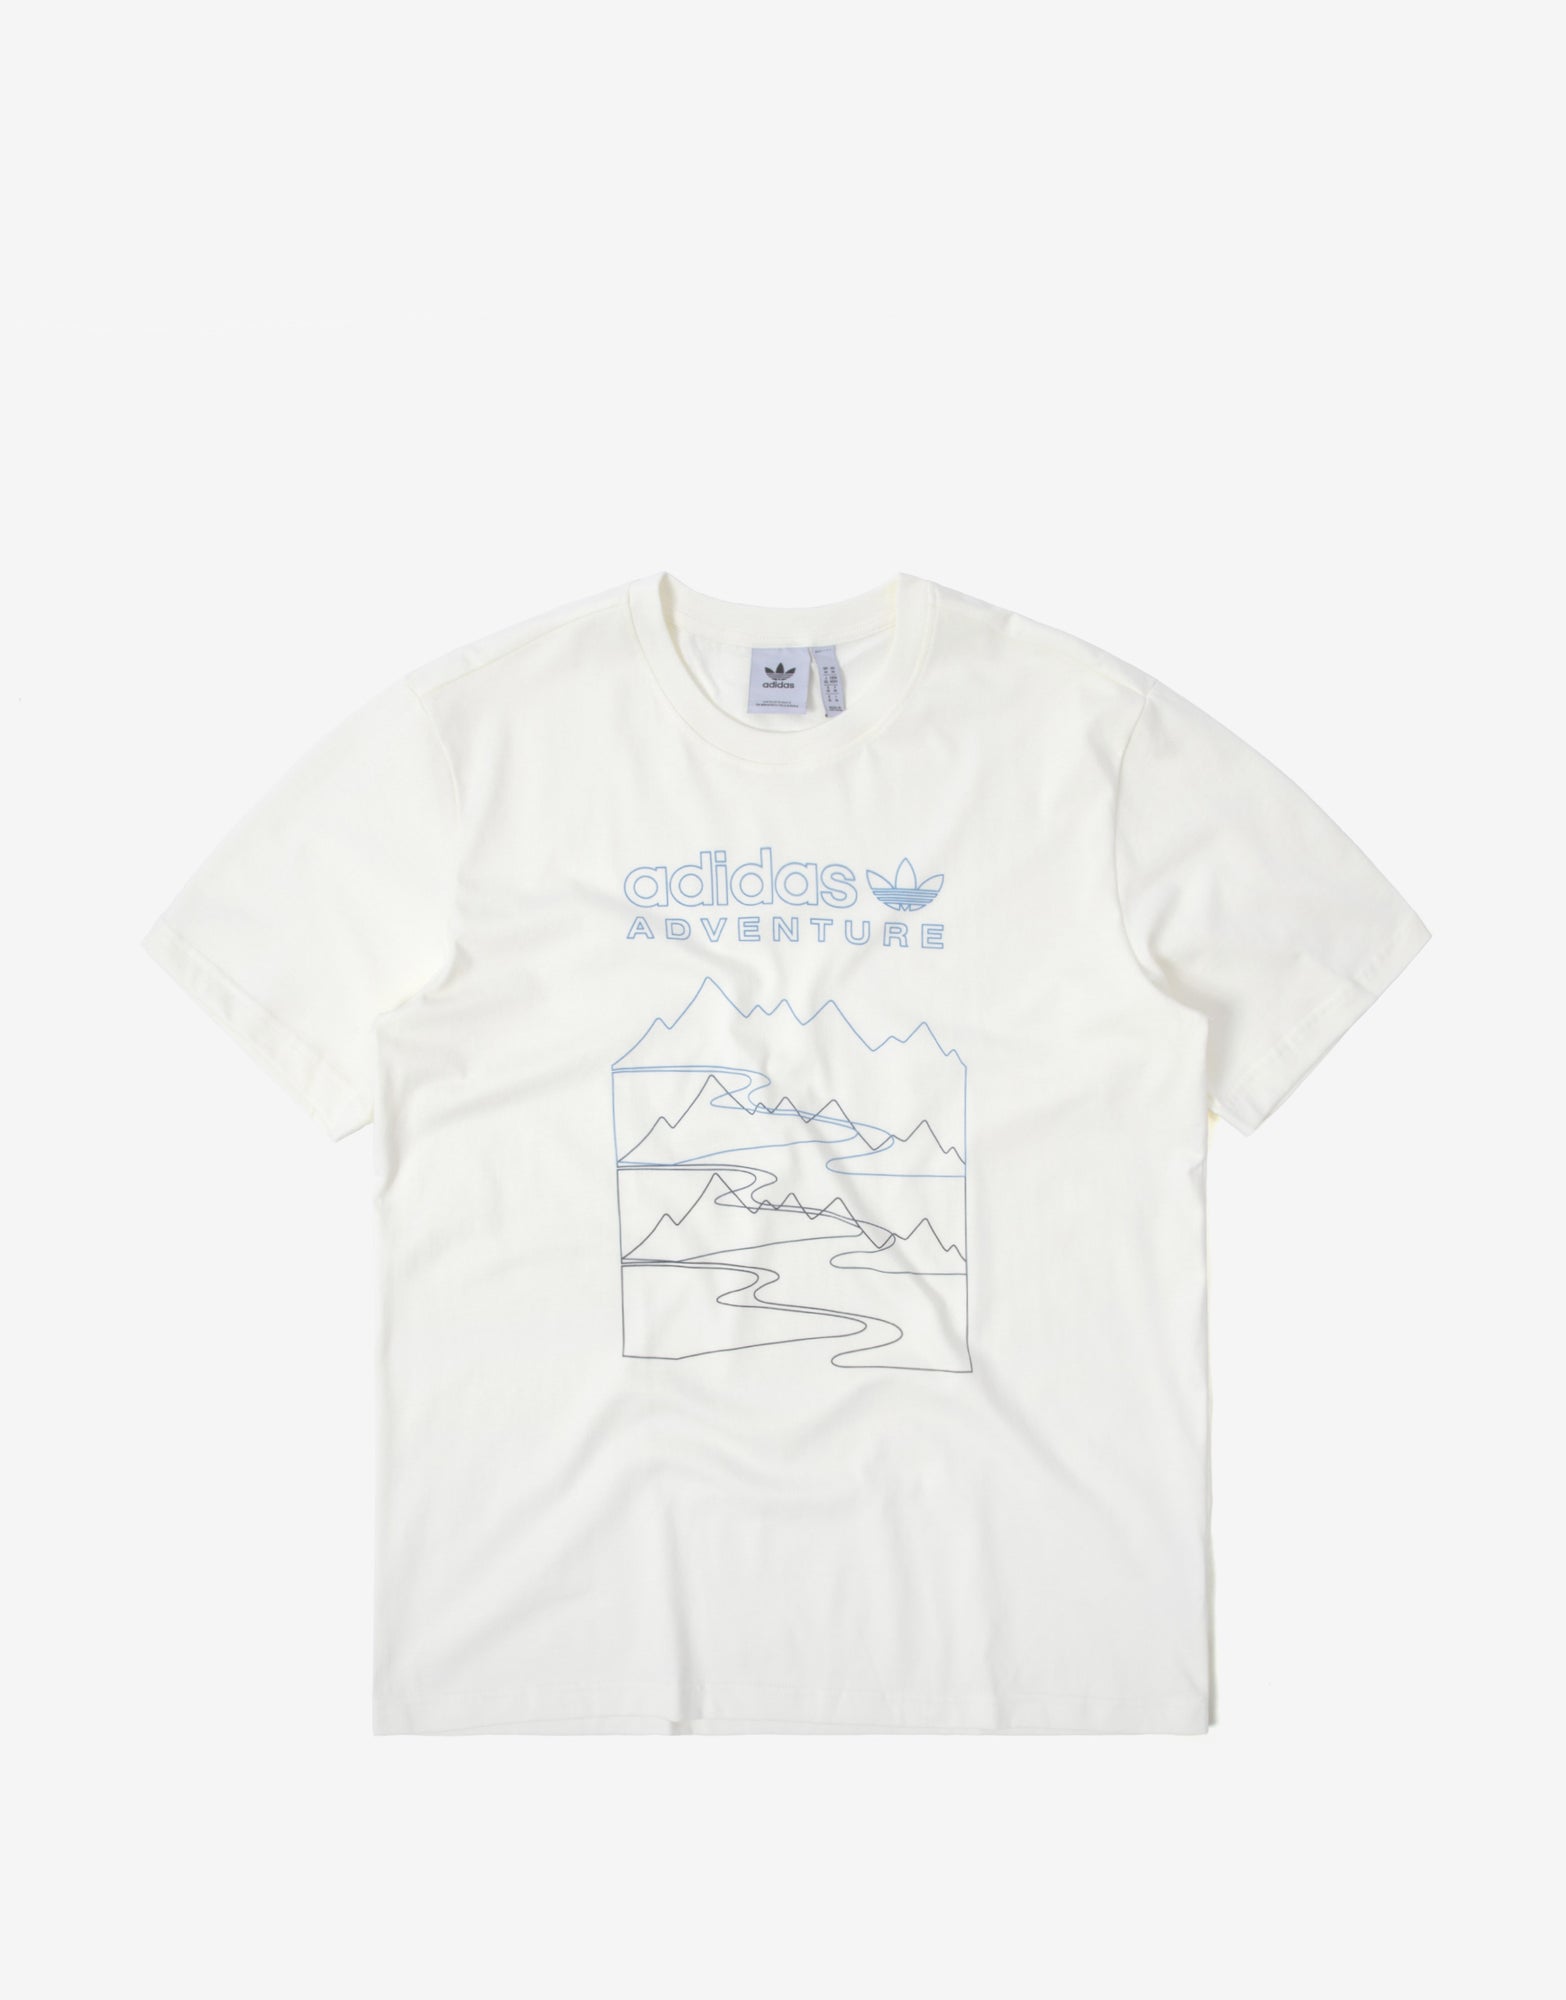 adidas Originals Adventure Mountain Front T Shirt Off White | The Chimp ...